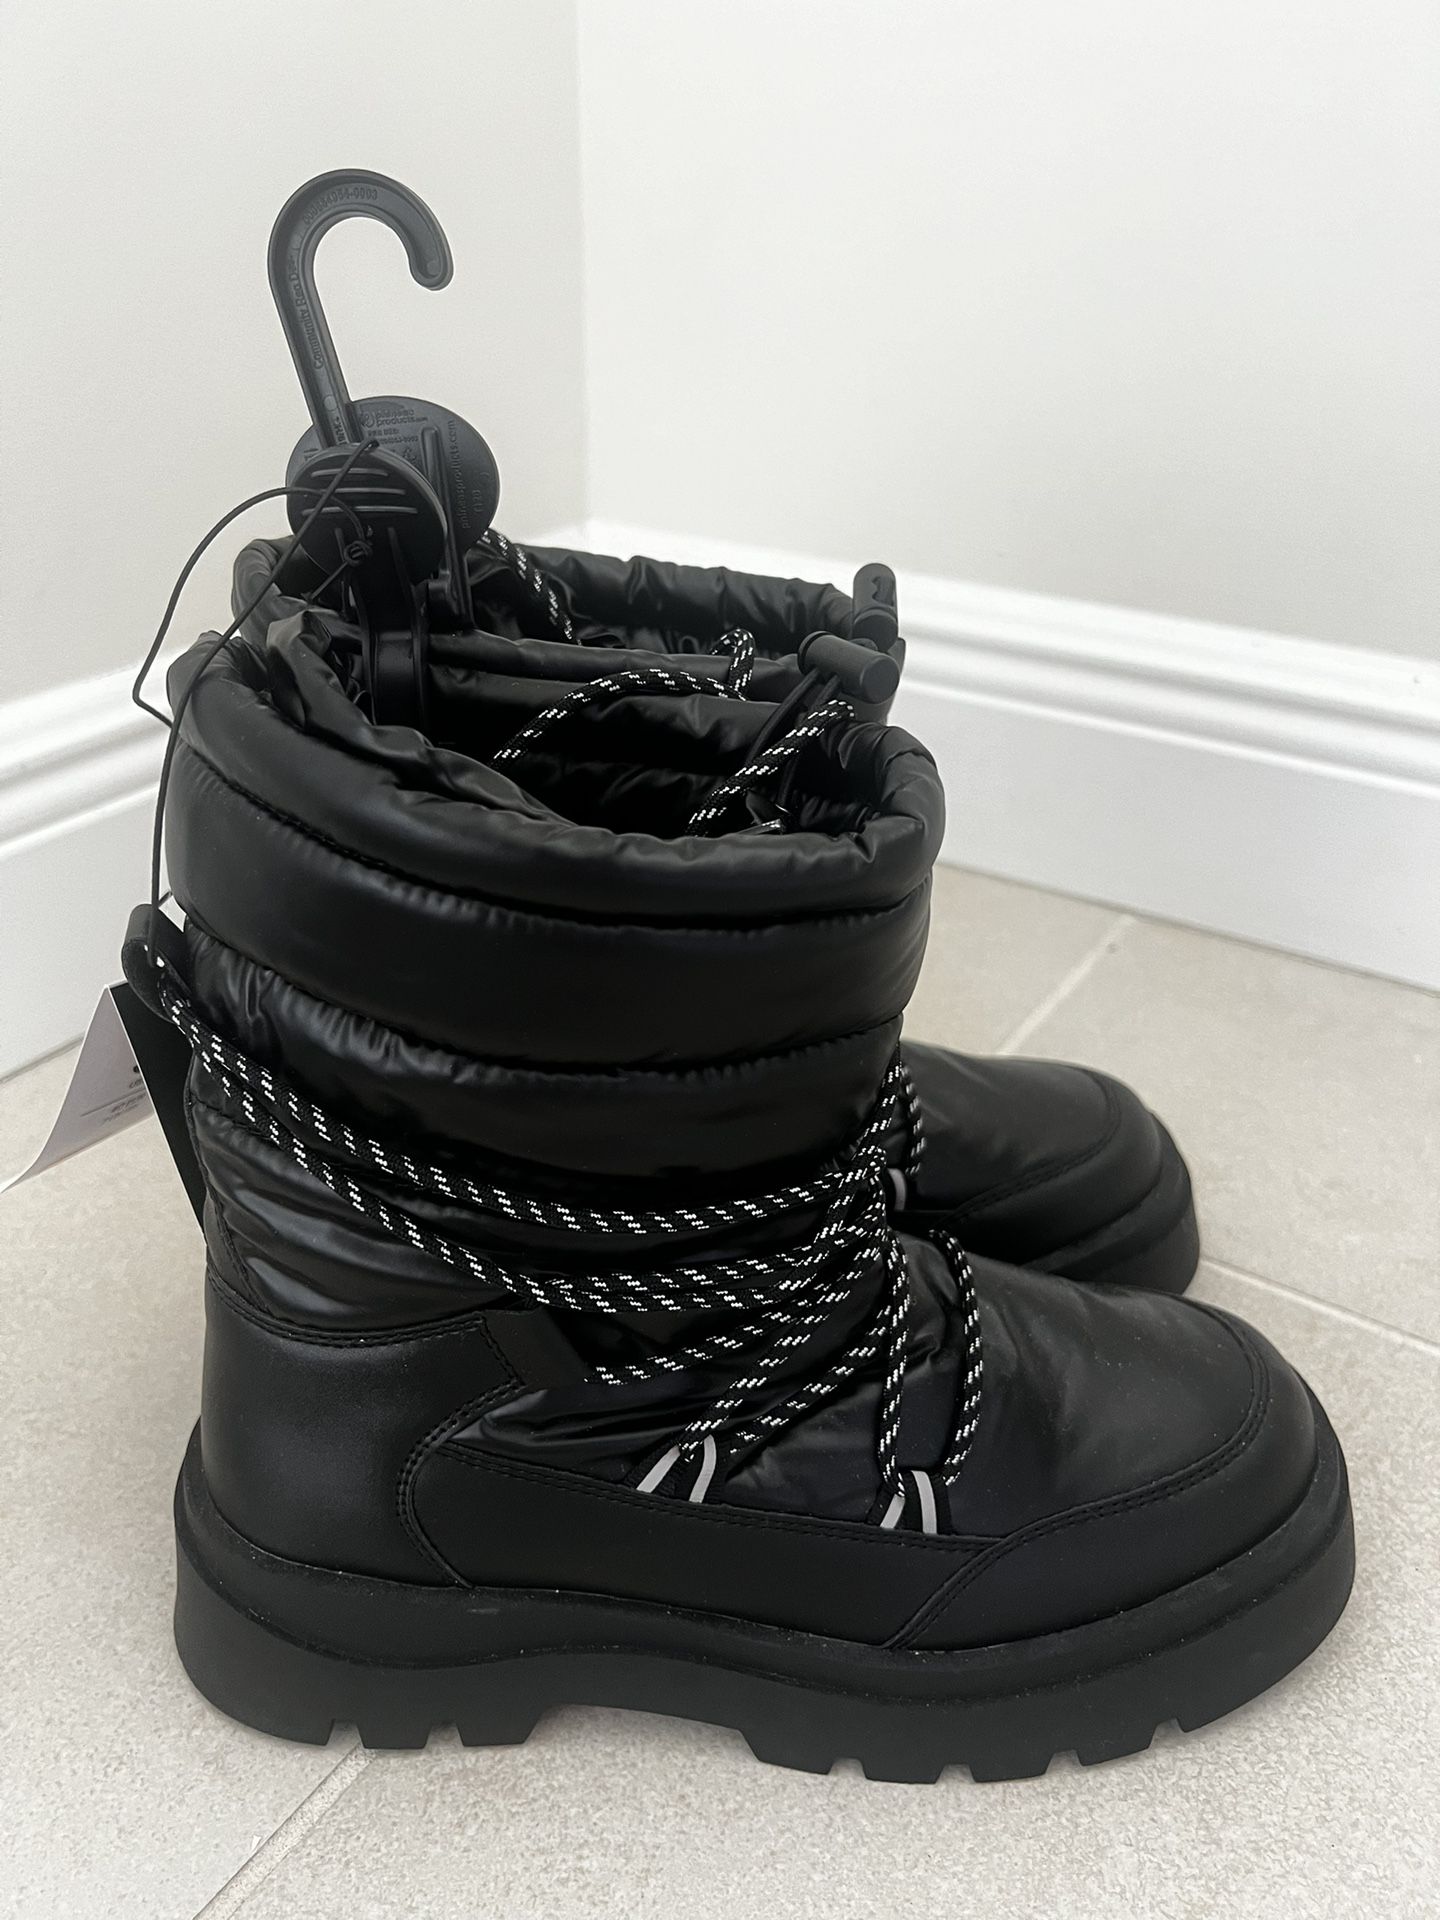 Waterproof Winter Boots/ snow boots